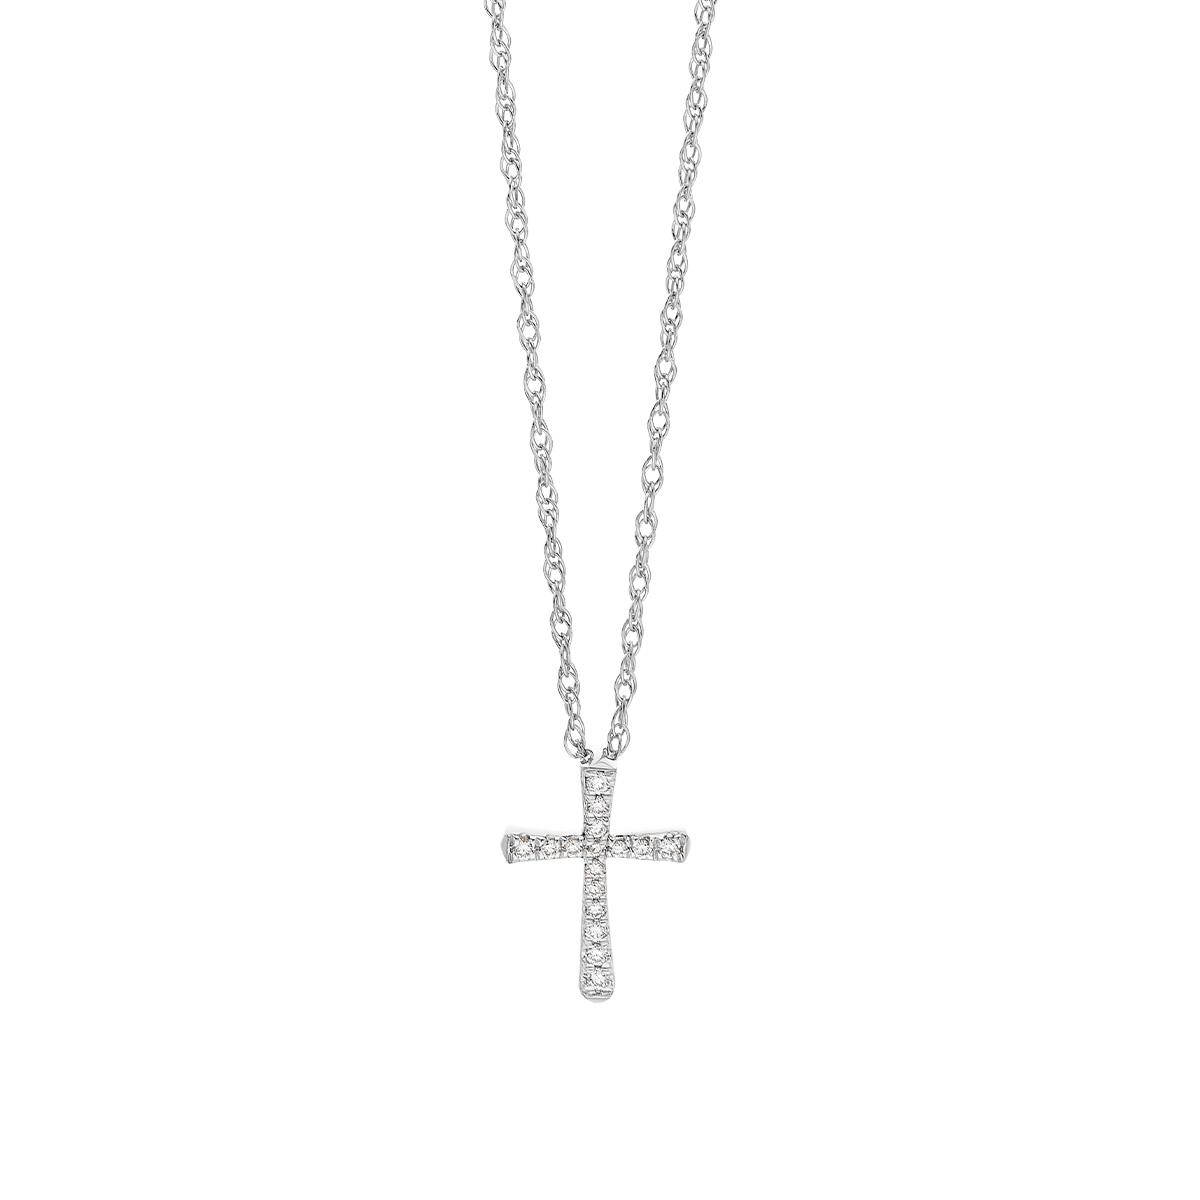 White Gold & Diamond 12mm Cross Pendant Necklace 0